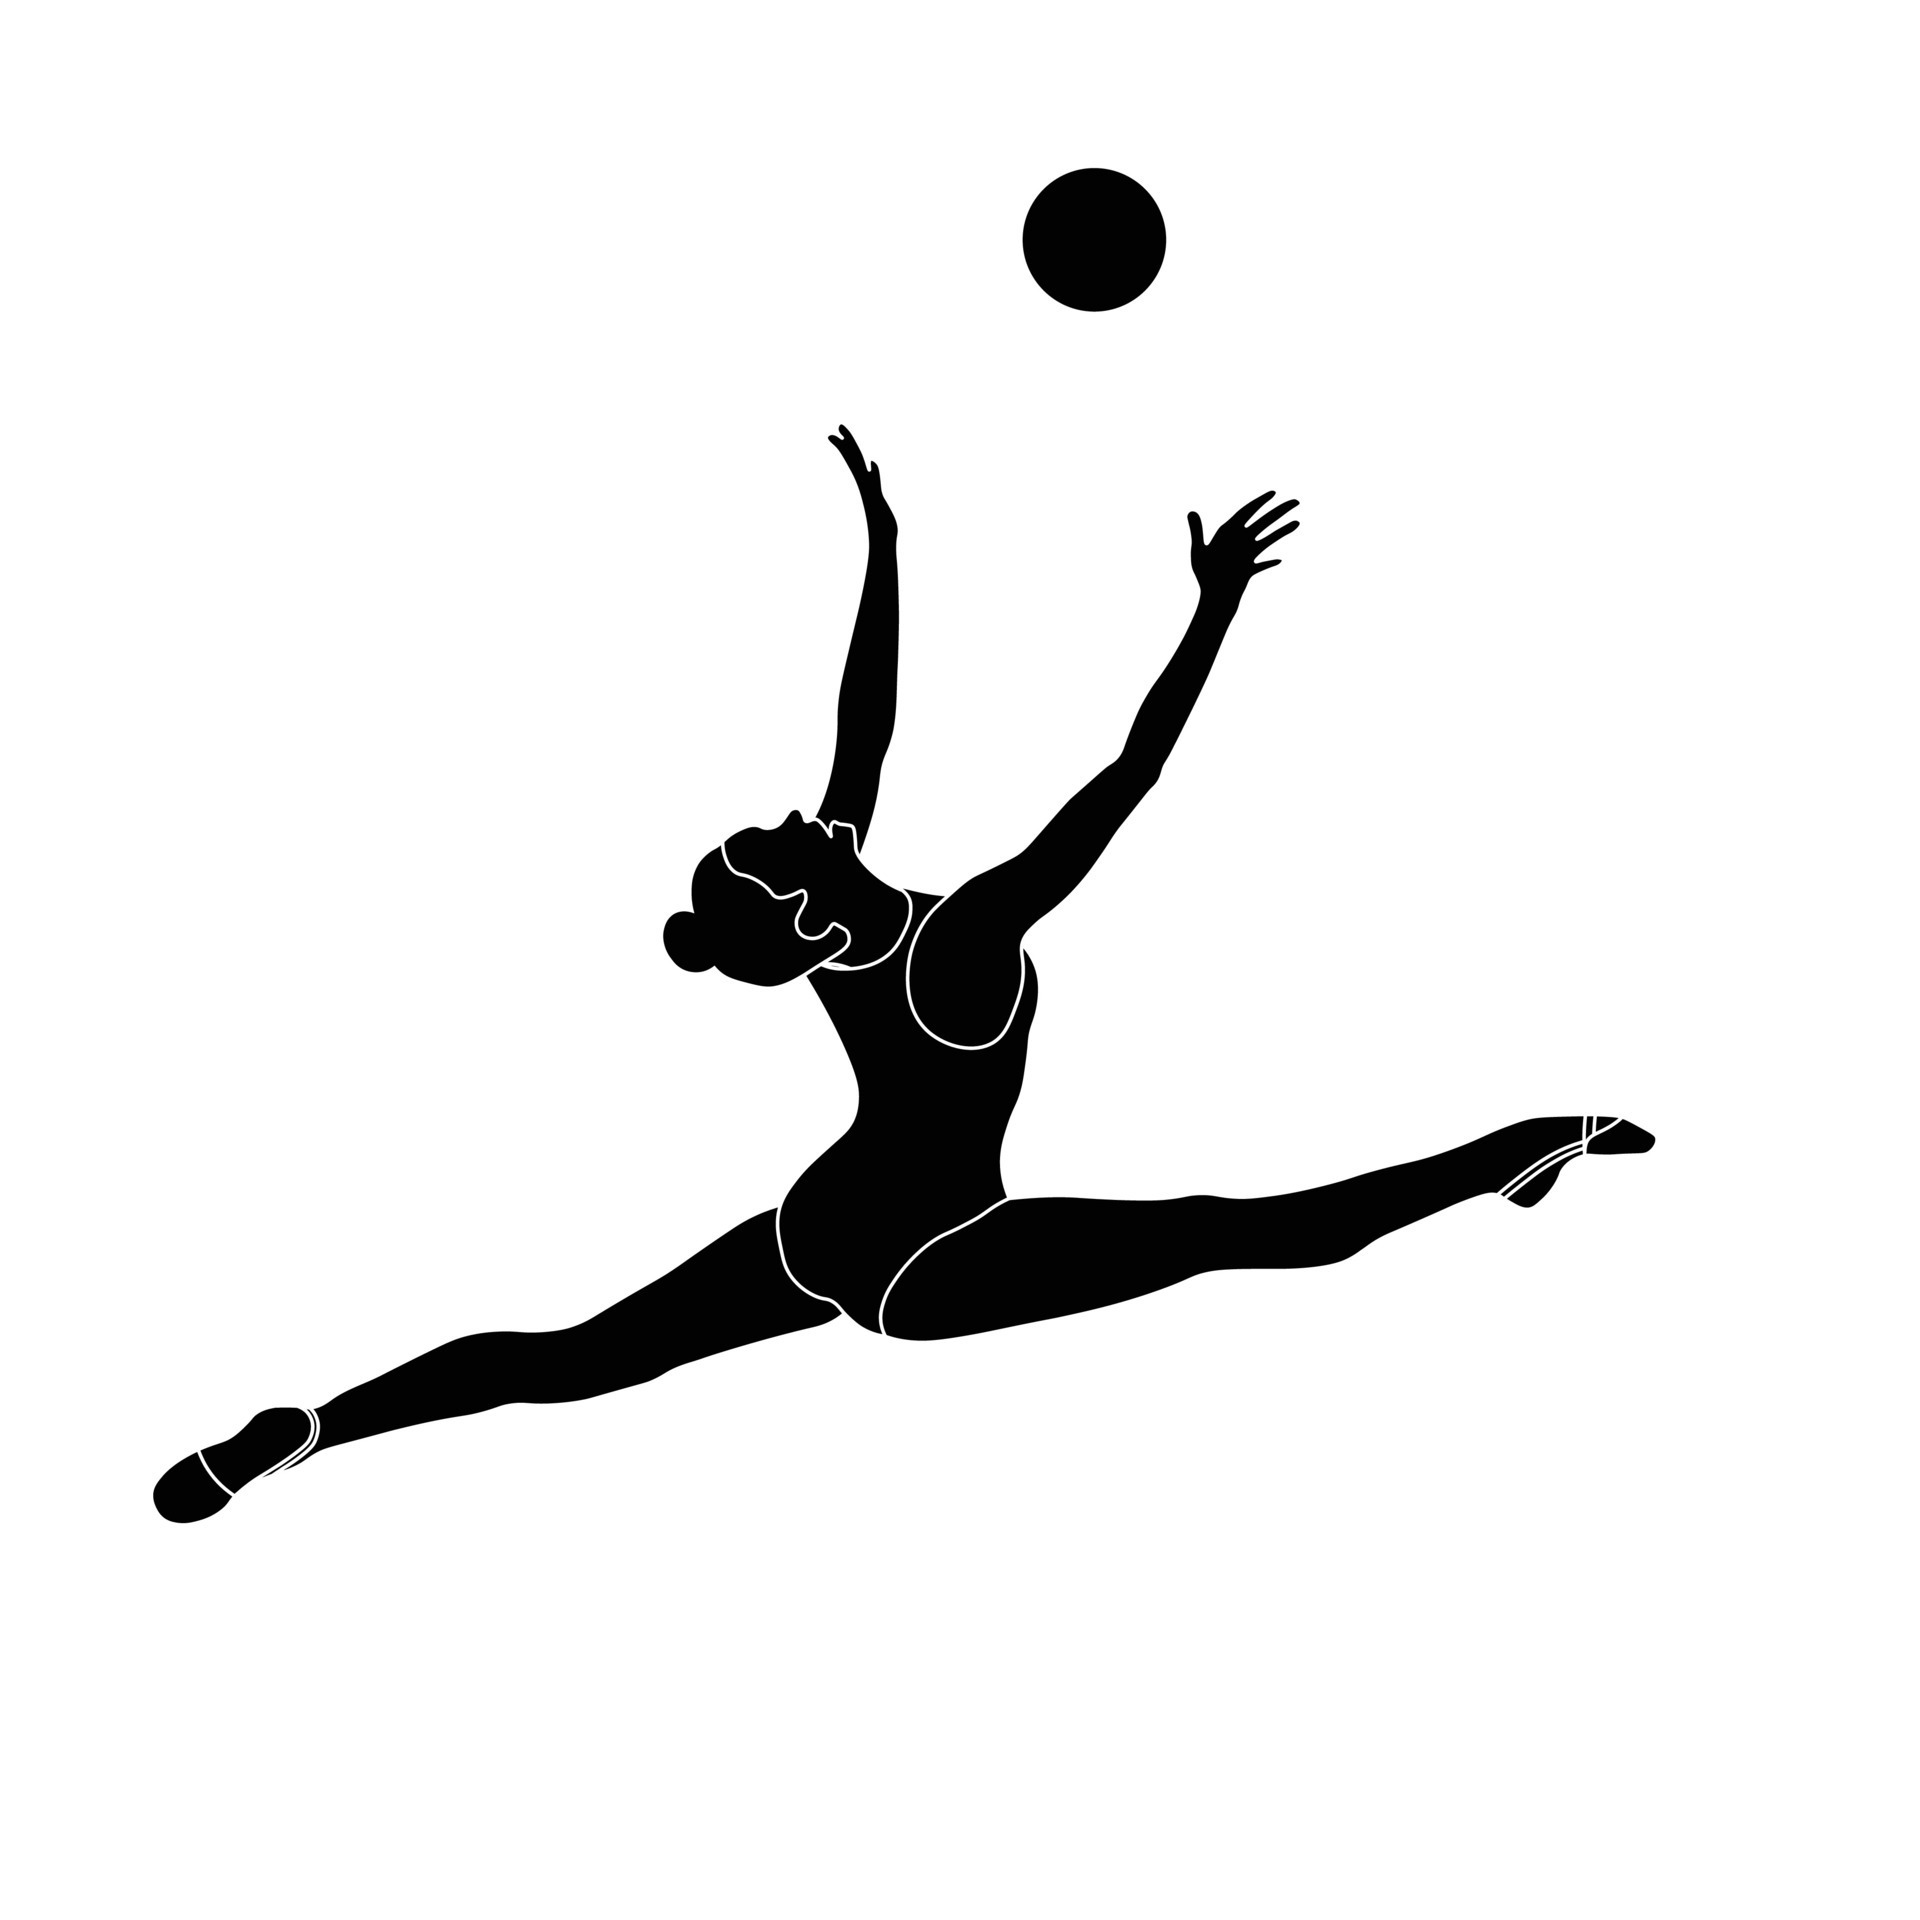 https://static.vecteezy.com/system/resources/previews/026/145/427/original/ball-rhythmic-gymnastics-flat-sihouette-rhythmic-gymnastics-female-athlete-black-icon-on-white-background-vector.jpg